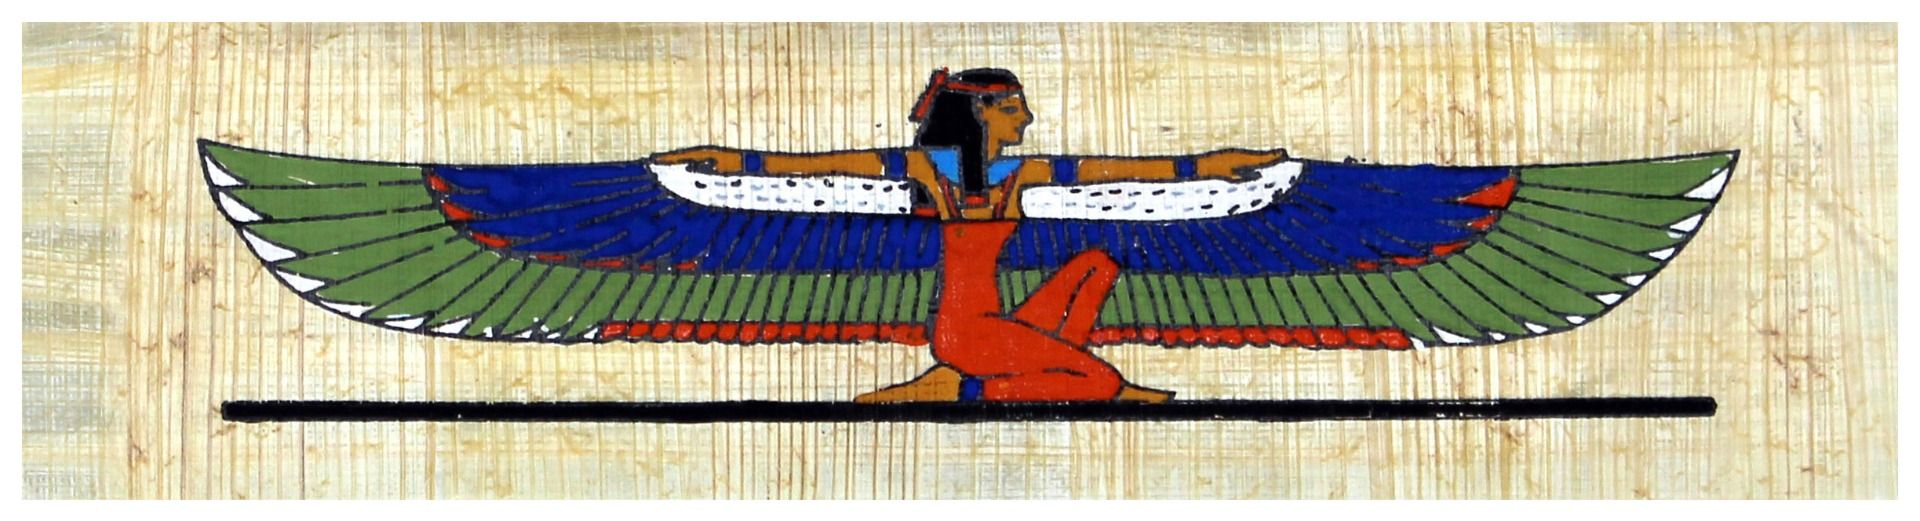 Papyrus Lesezeichen - Göttin Maat bemalt